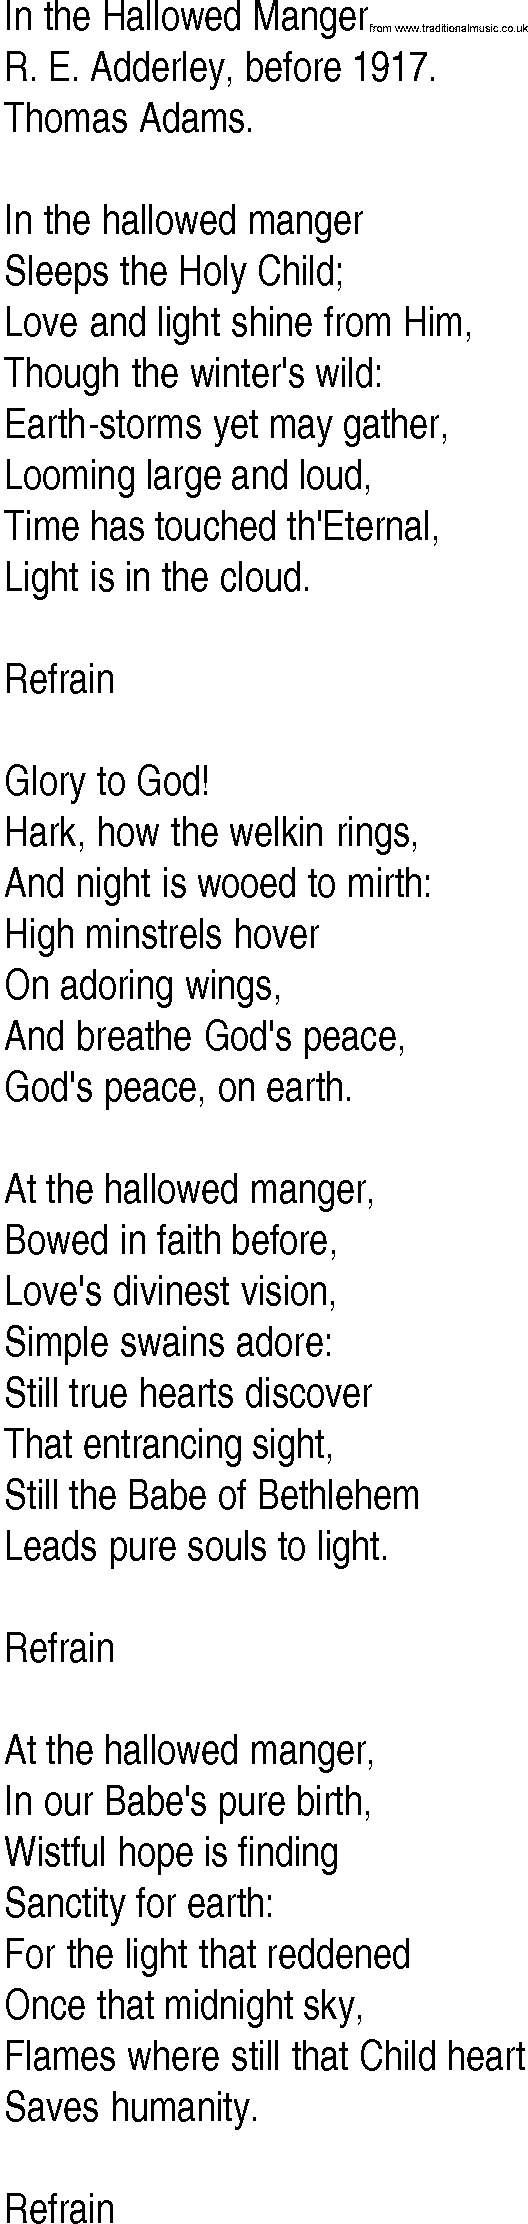 Hymn and Gospel Song: In the Hallowed Manger by R E Adderley before lyrics